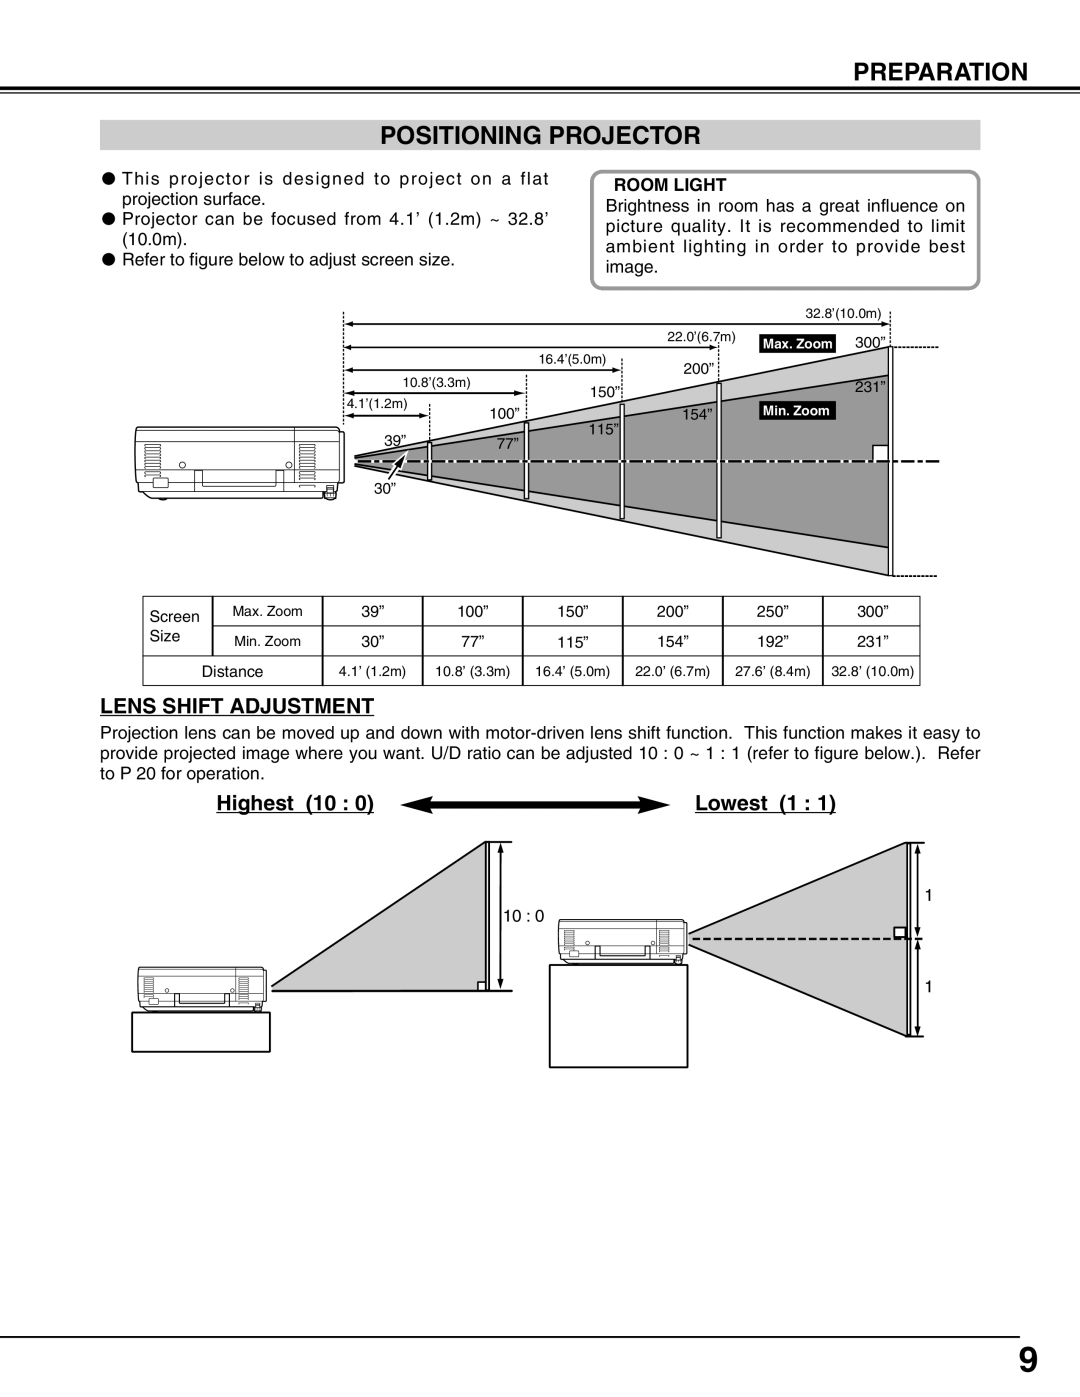 Sanyo PLC-XT10A owner manual Preparation Positioning Projector, Lens Shift Adjustment, Highest 10, Lowest 1 